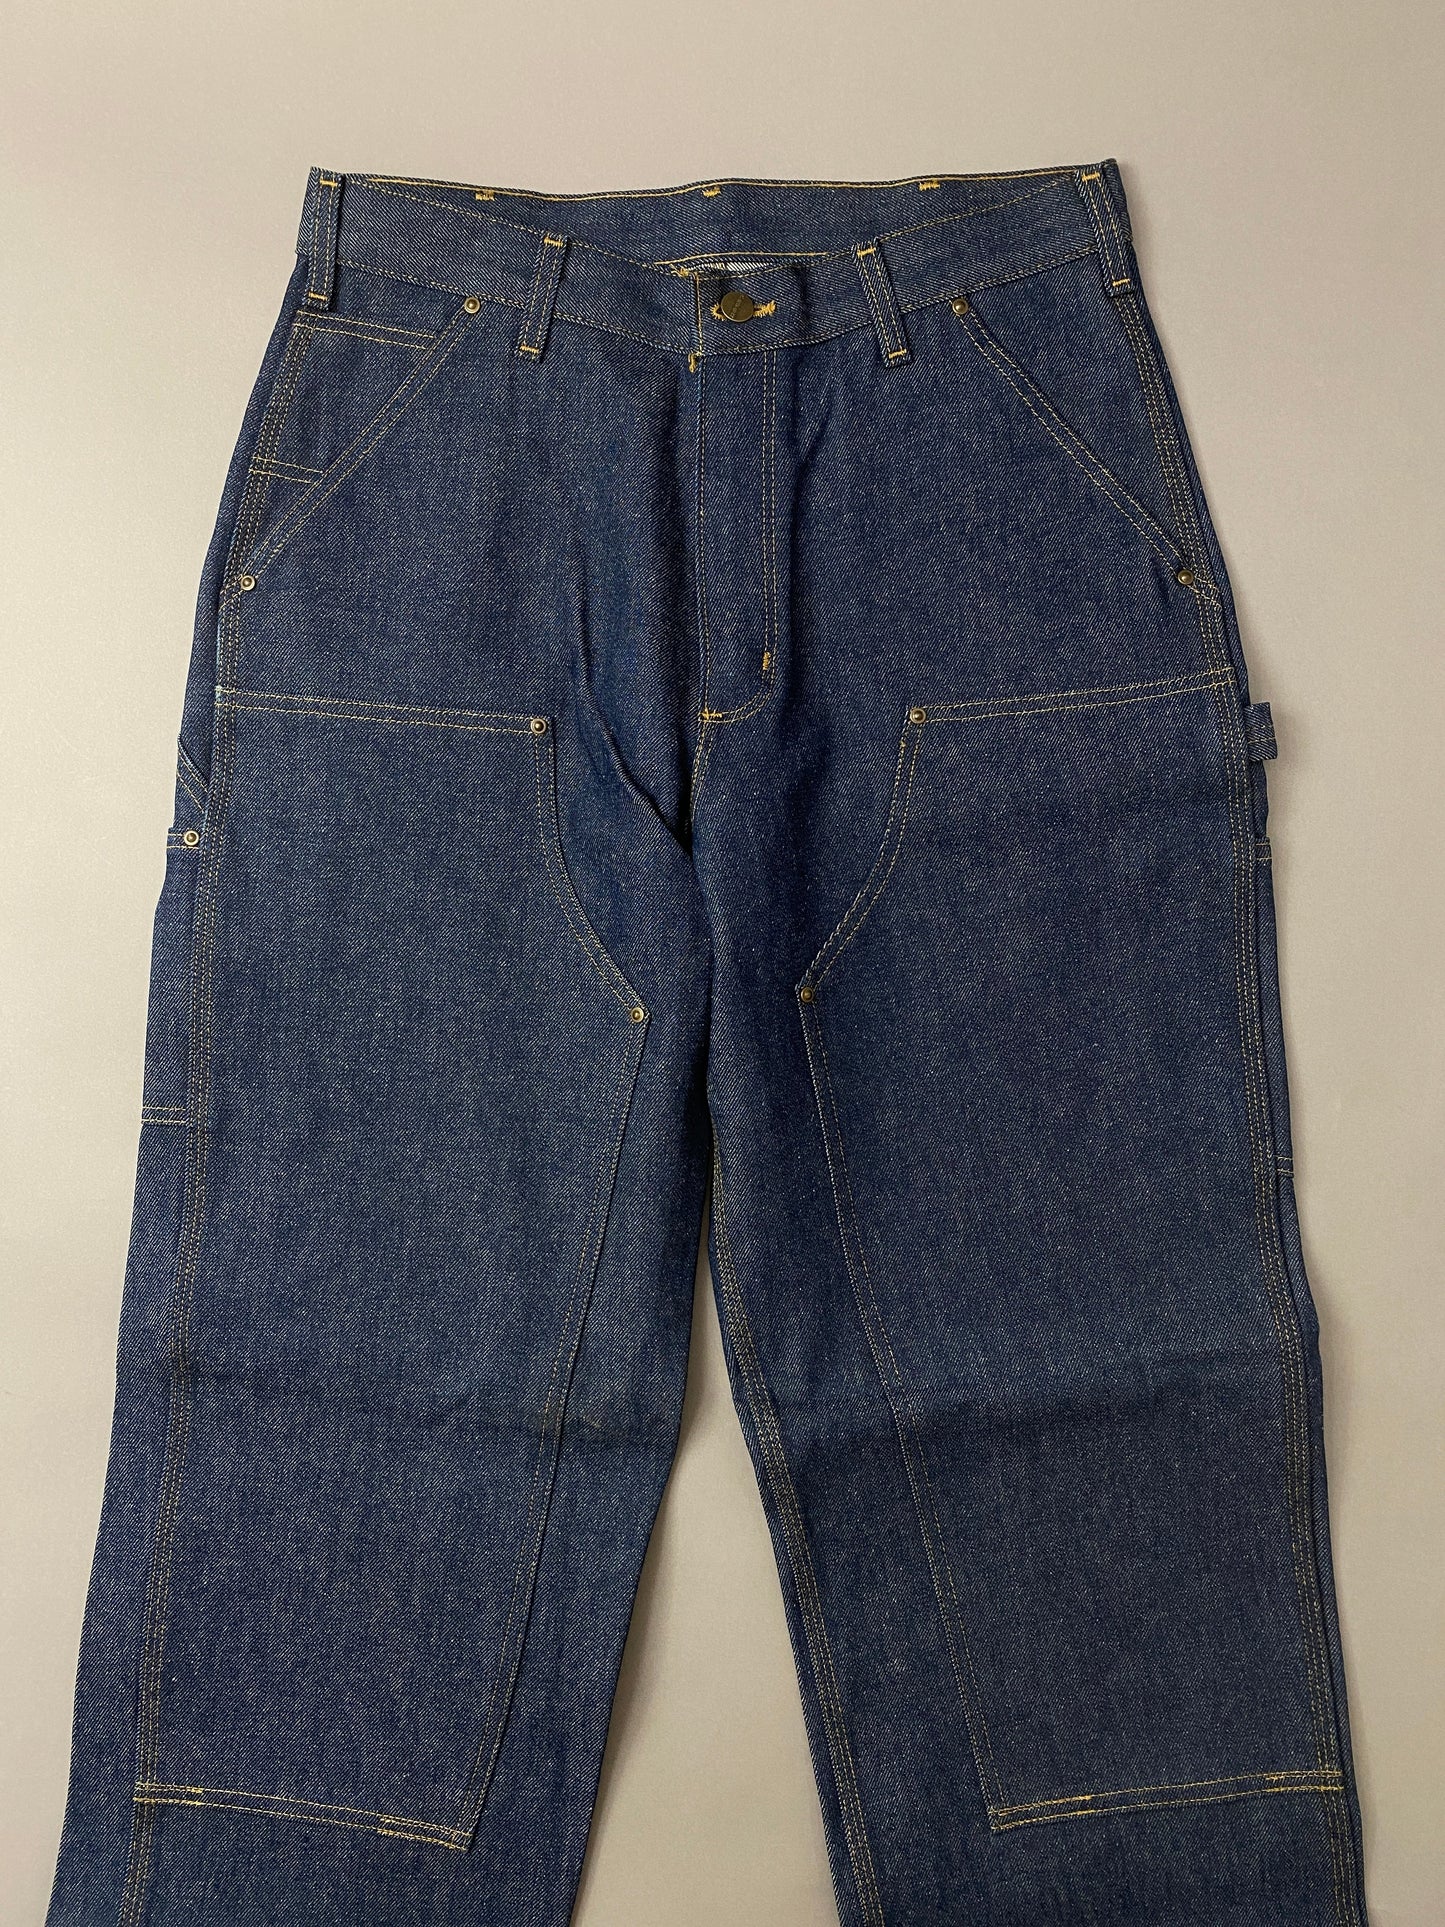 Double Knee Carhartt Jeans - 32 x 32